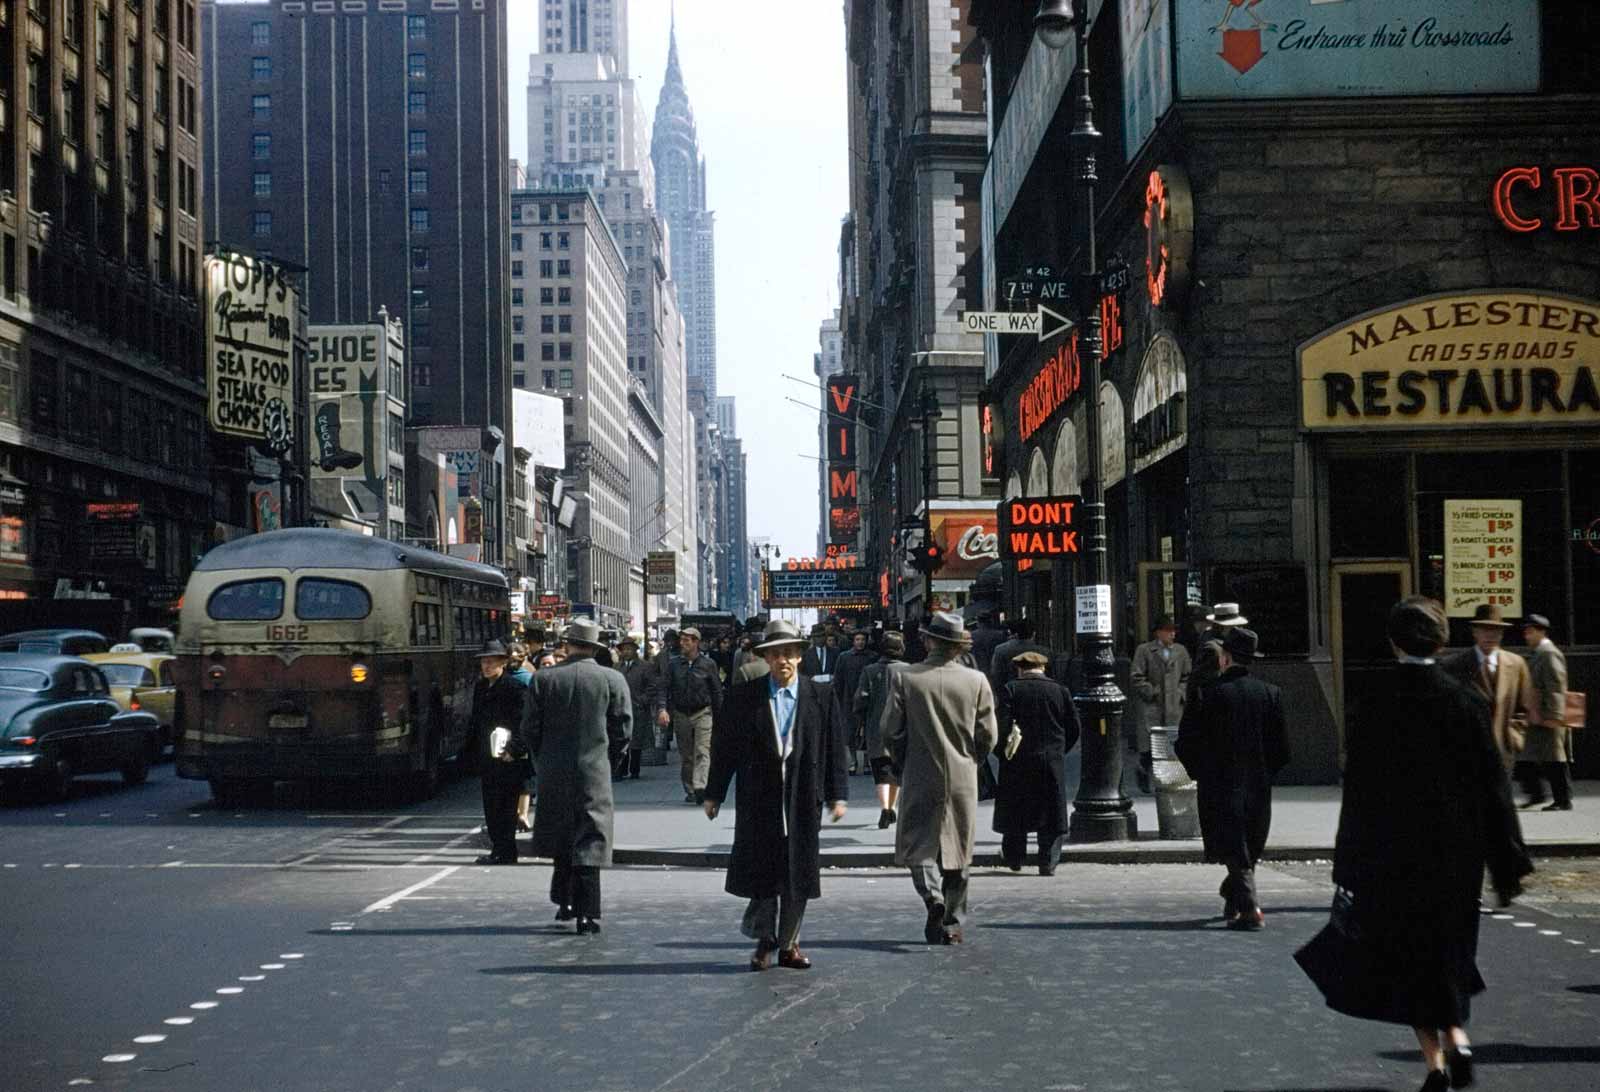 New York City, 1960